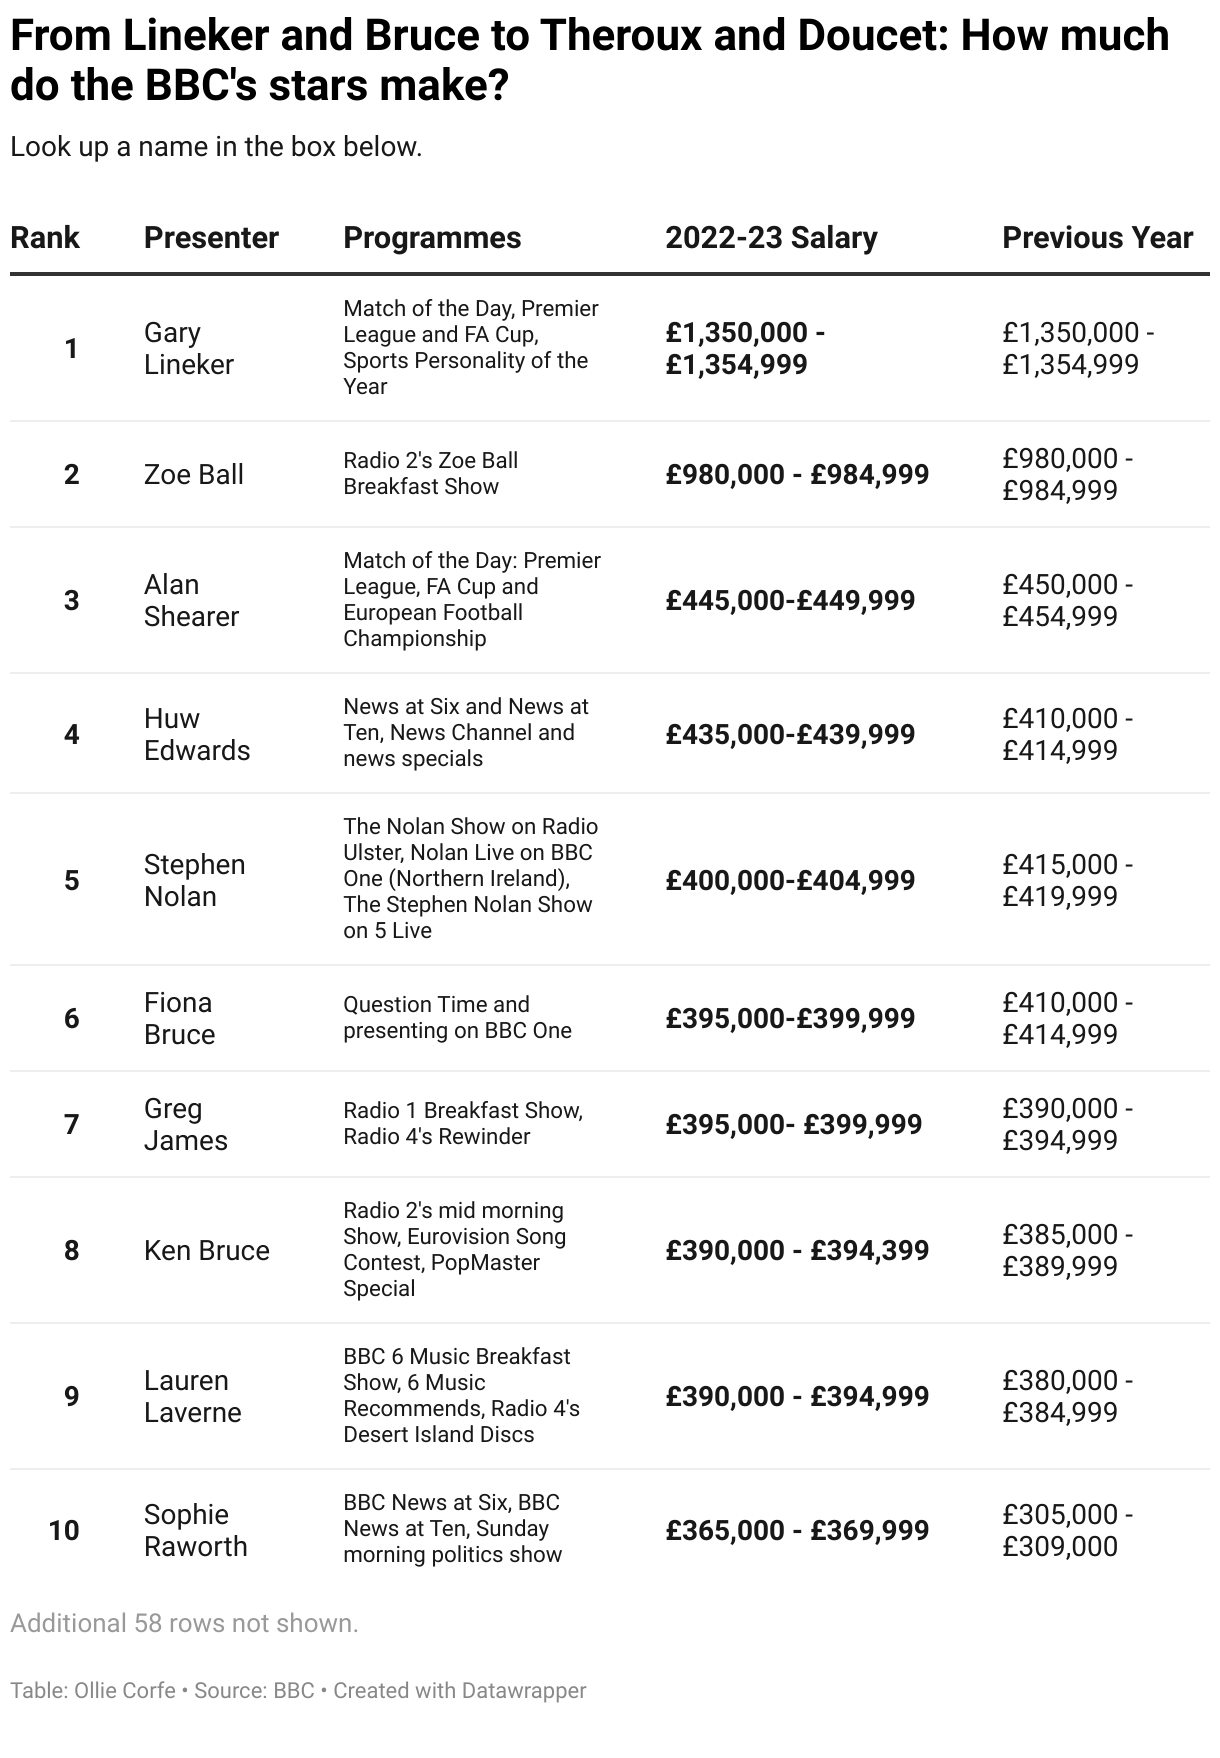 Table of BBC's highest earning stars.